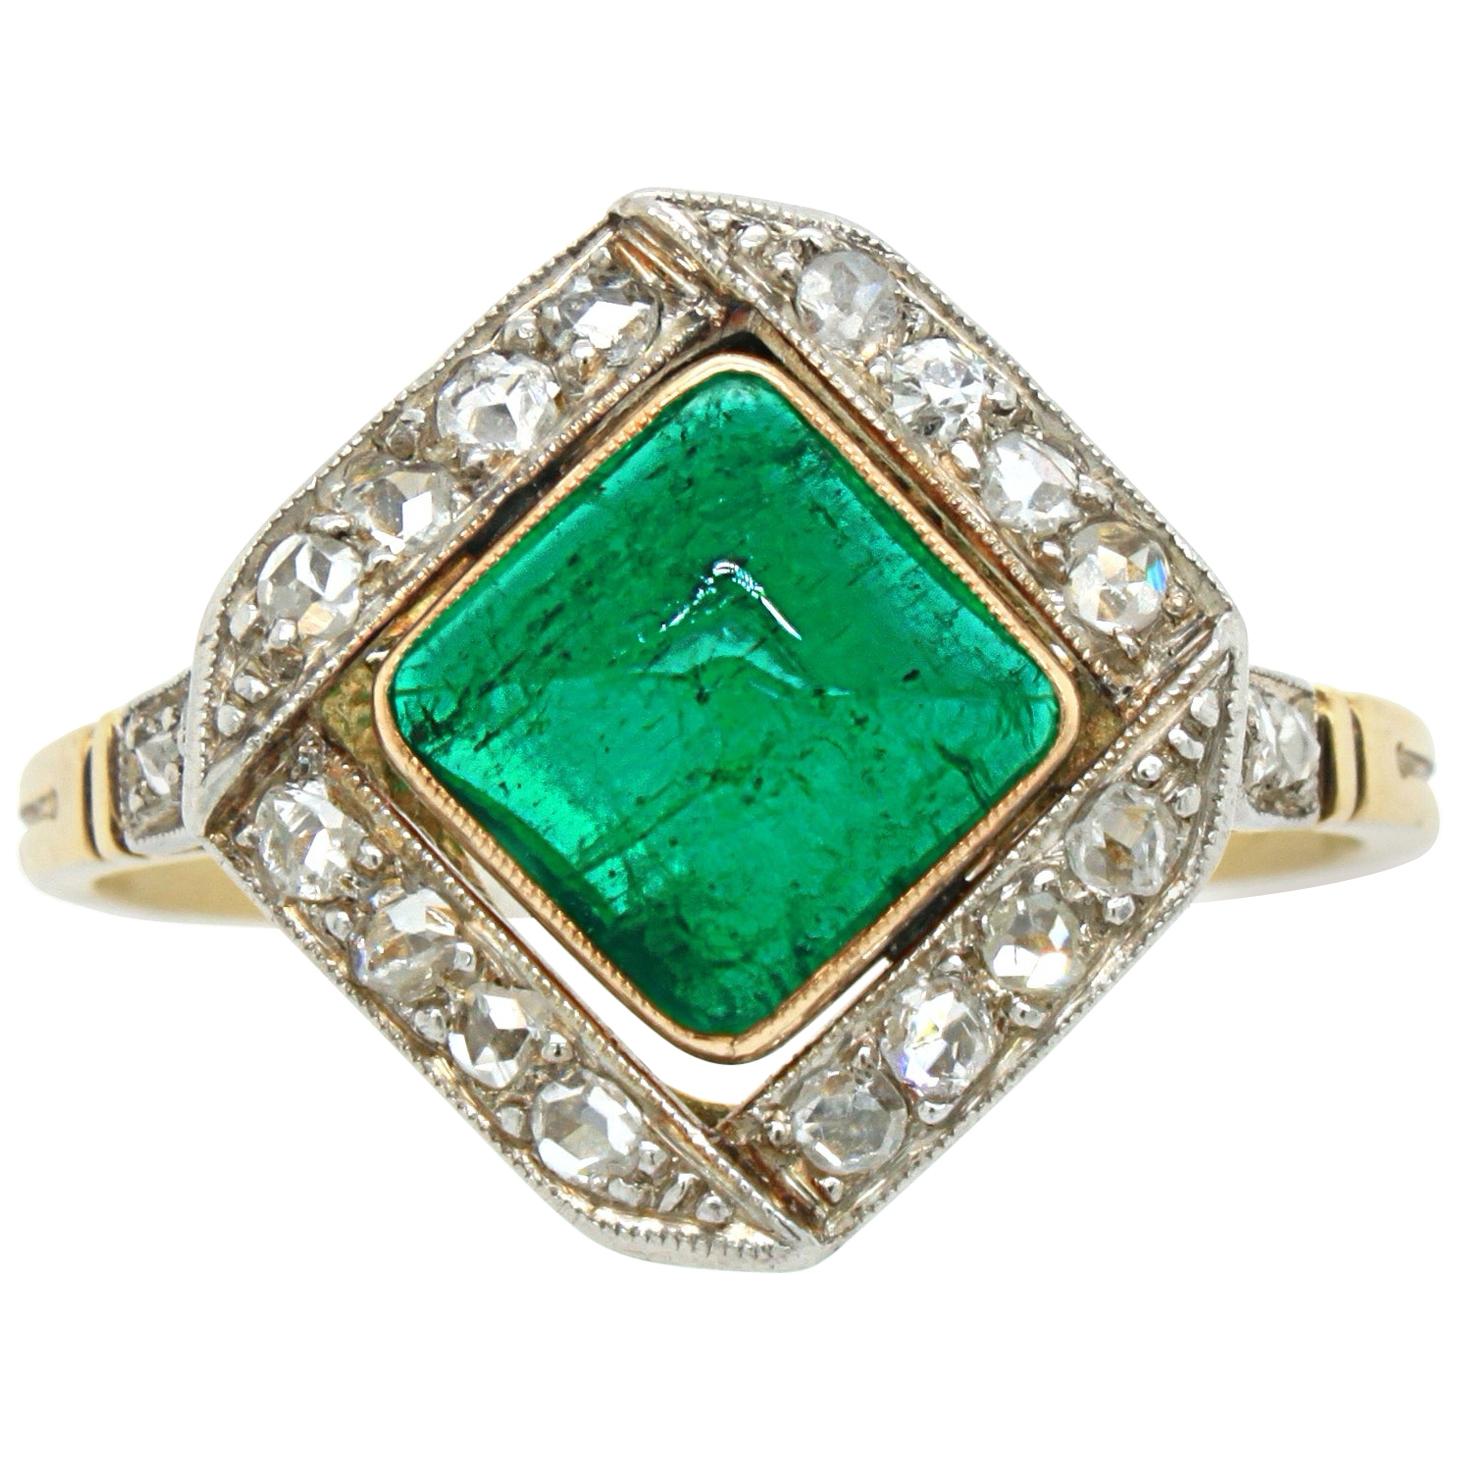 Emerald Sugarloaf and Diamond Ring, Edwardian, circa 1900s